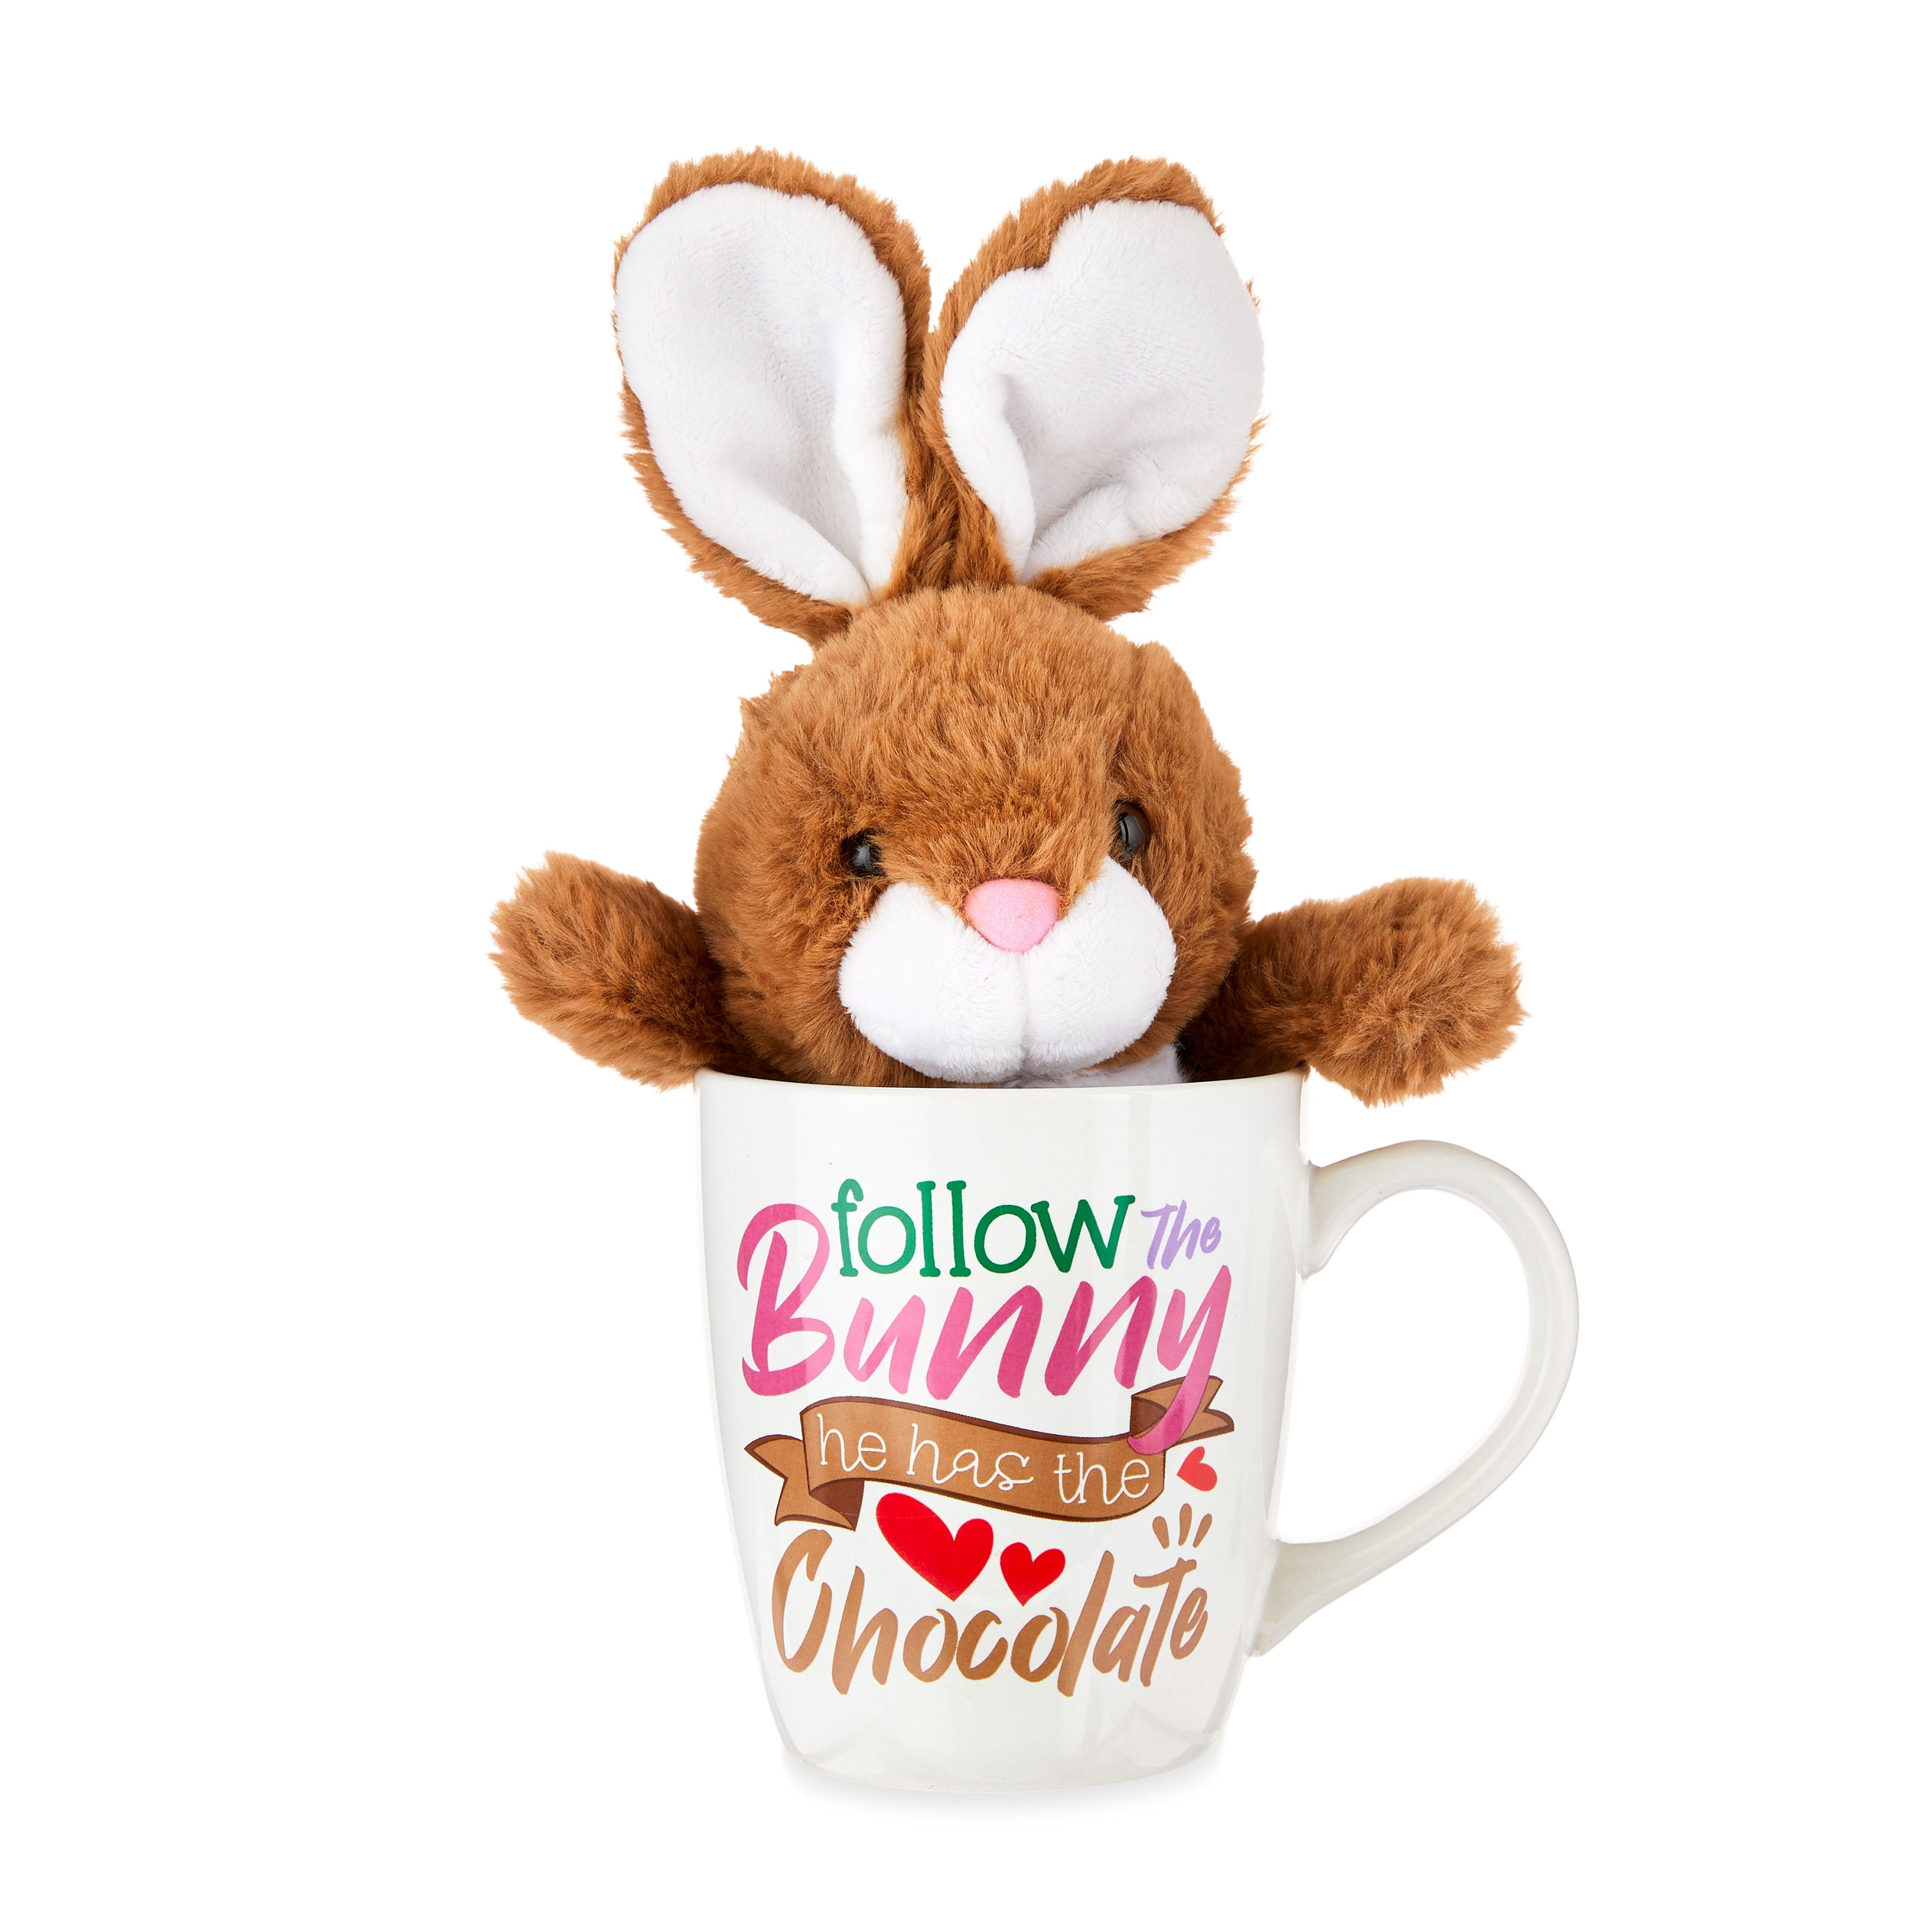 "Way to Celebrate! Easter Plush in Mug, Brown Bunny"